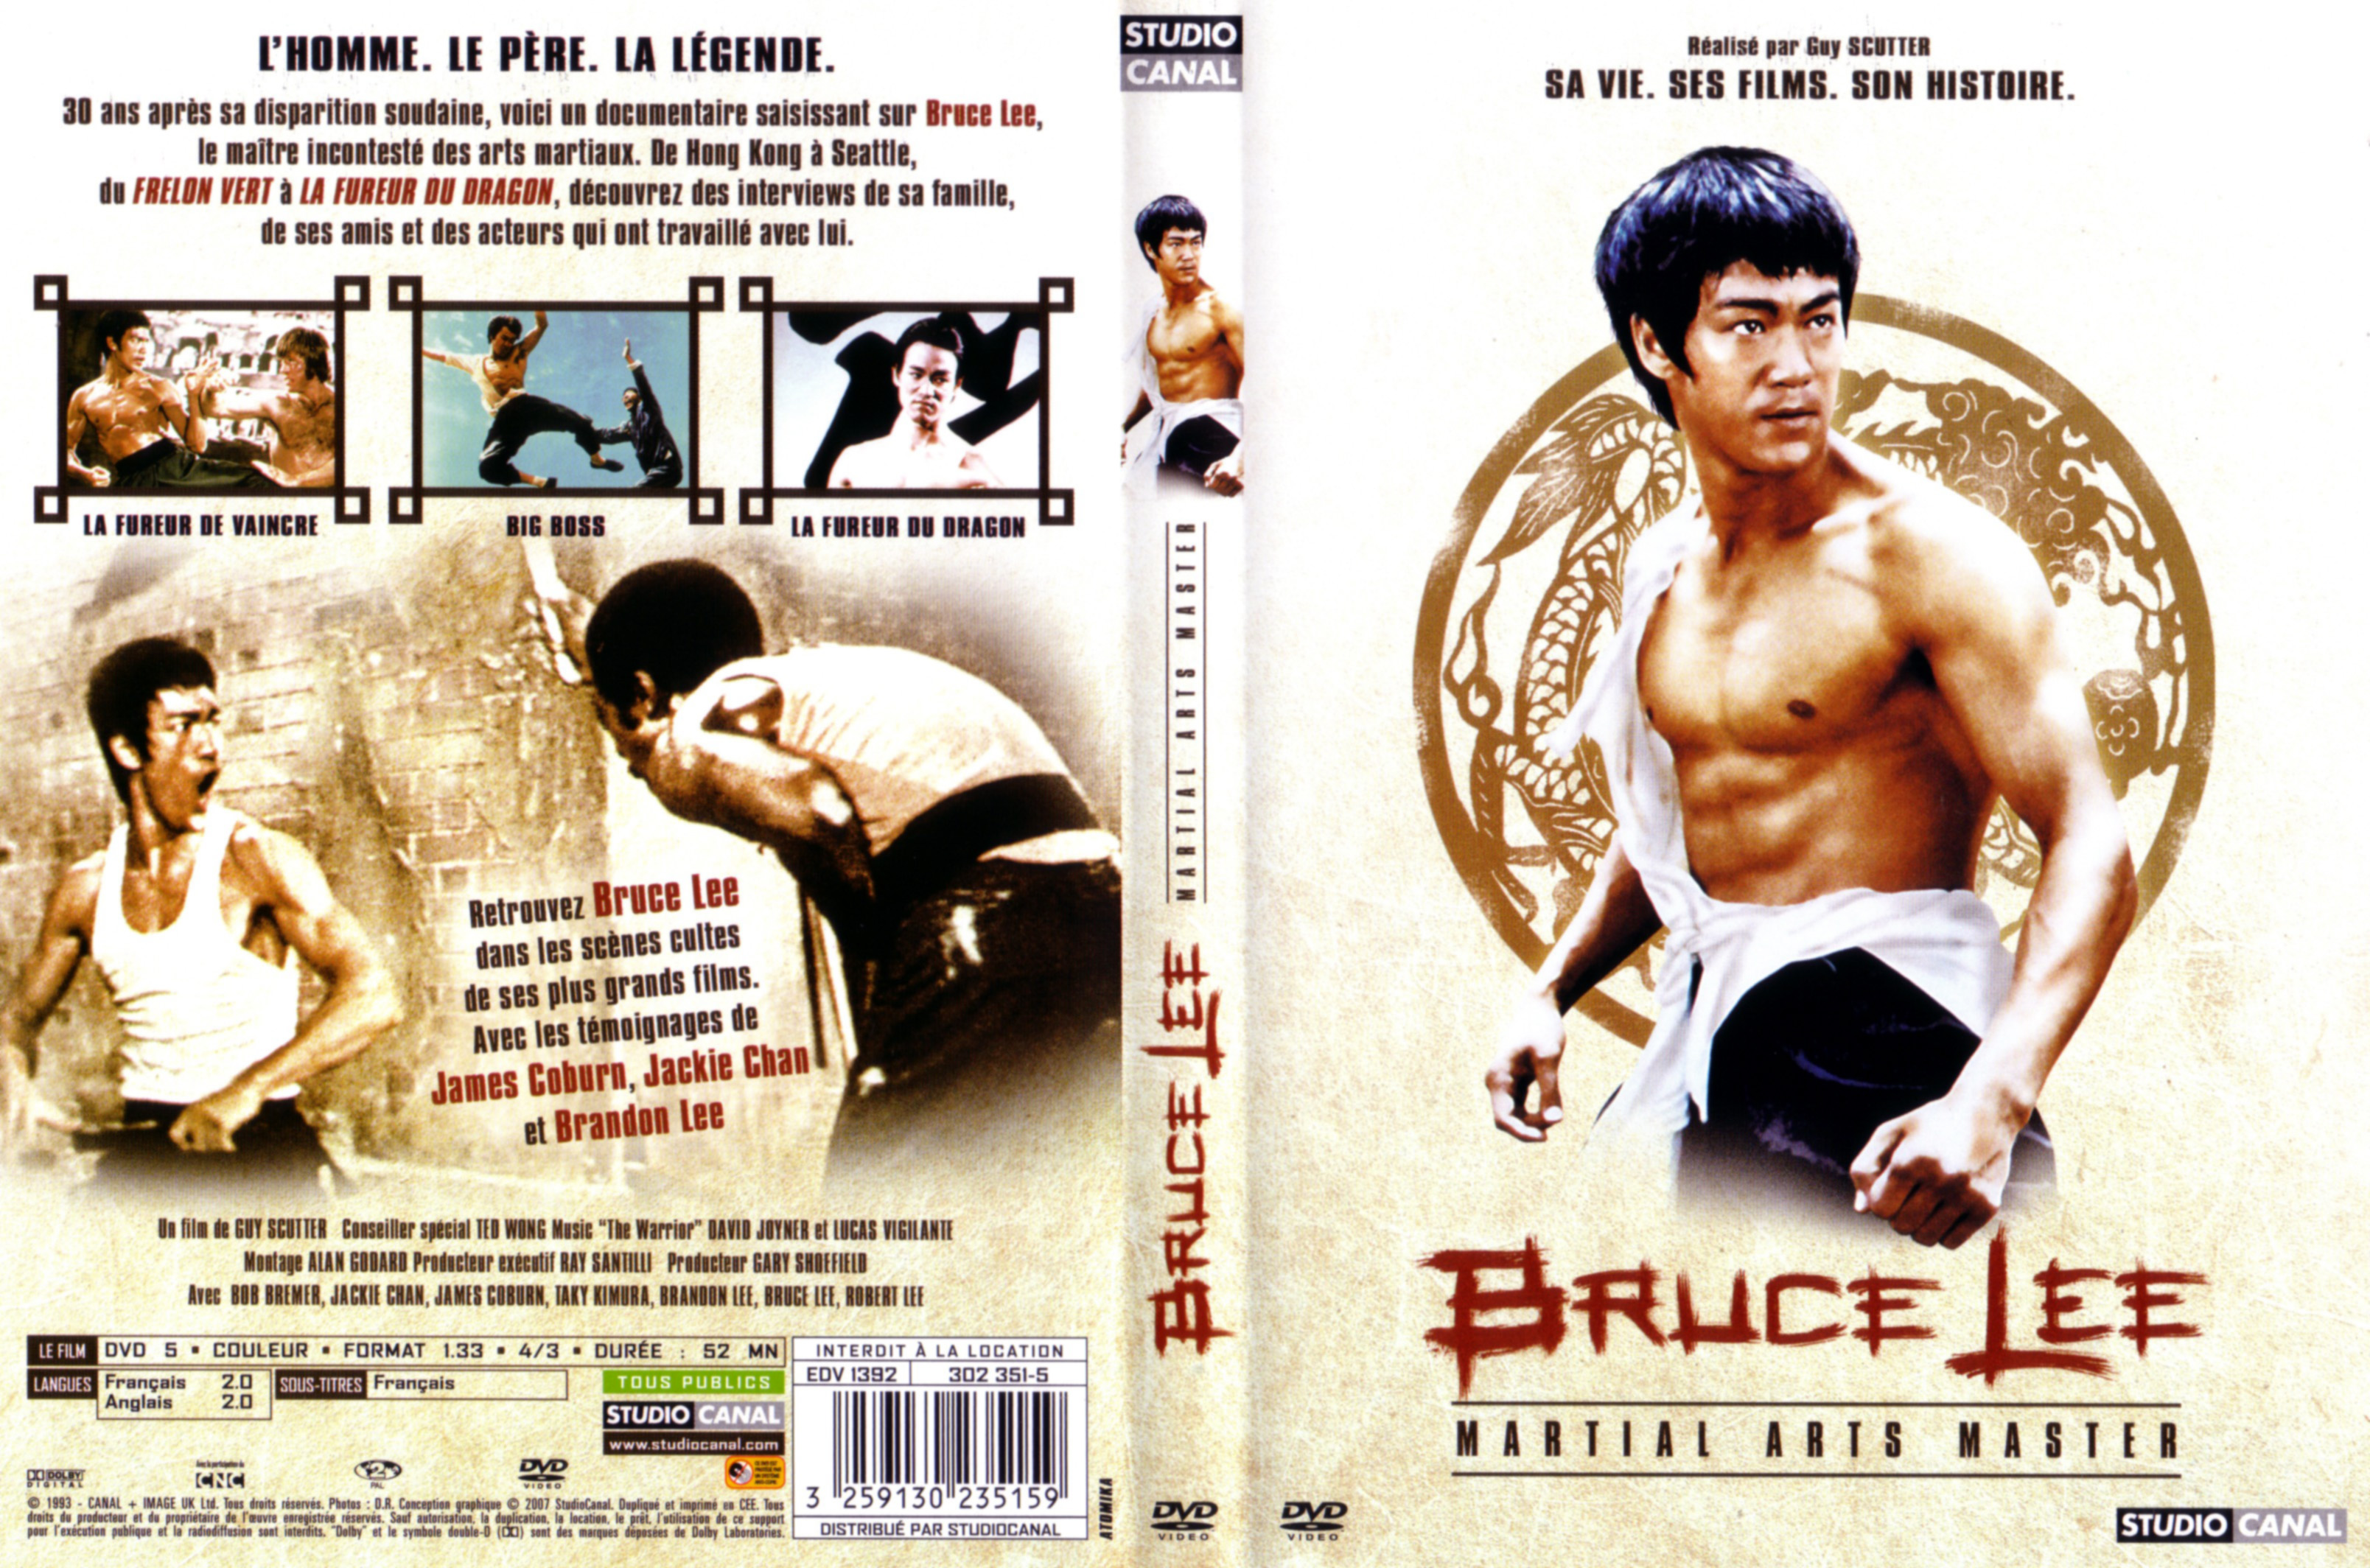 Jaquette DVD Bruce Lee - Martial arts master